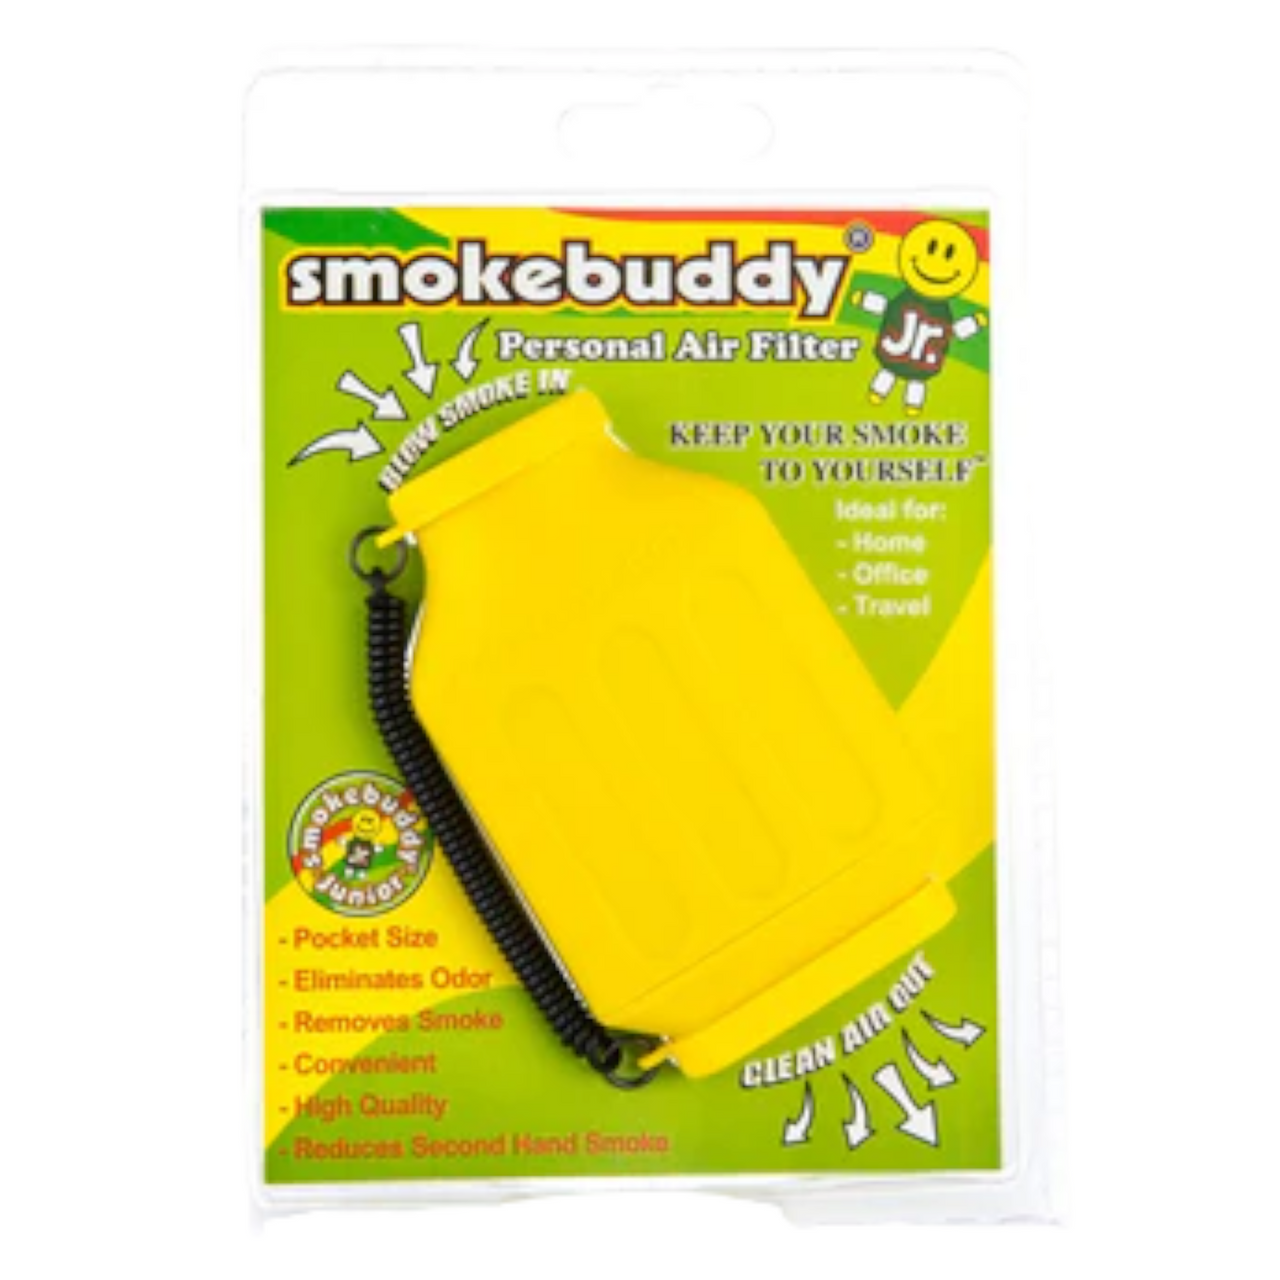 Smokebuddy Jr: Your Personal Smoke Filter Solution